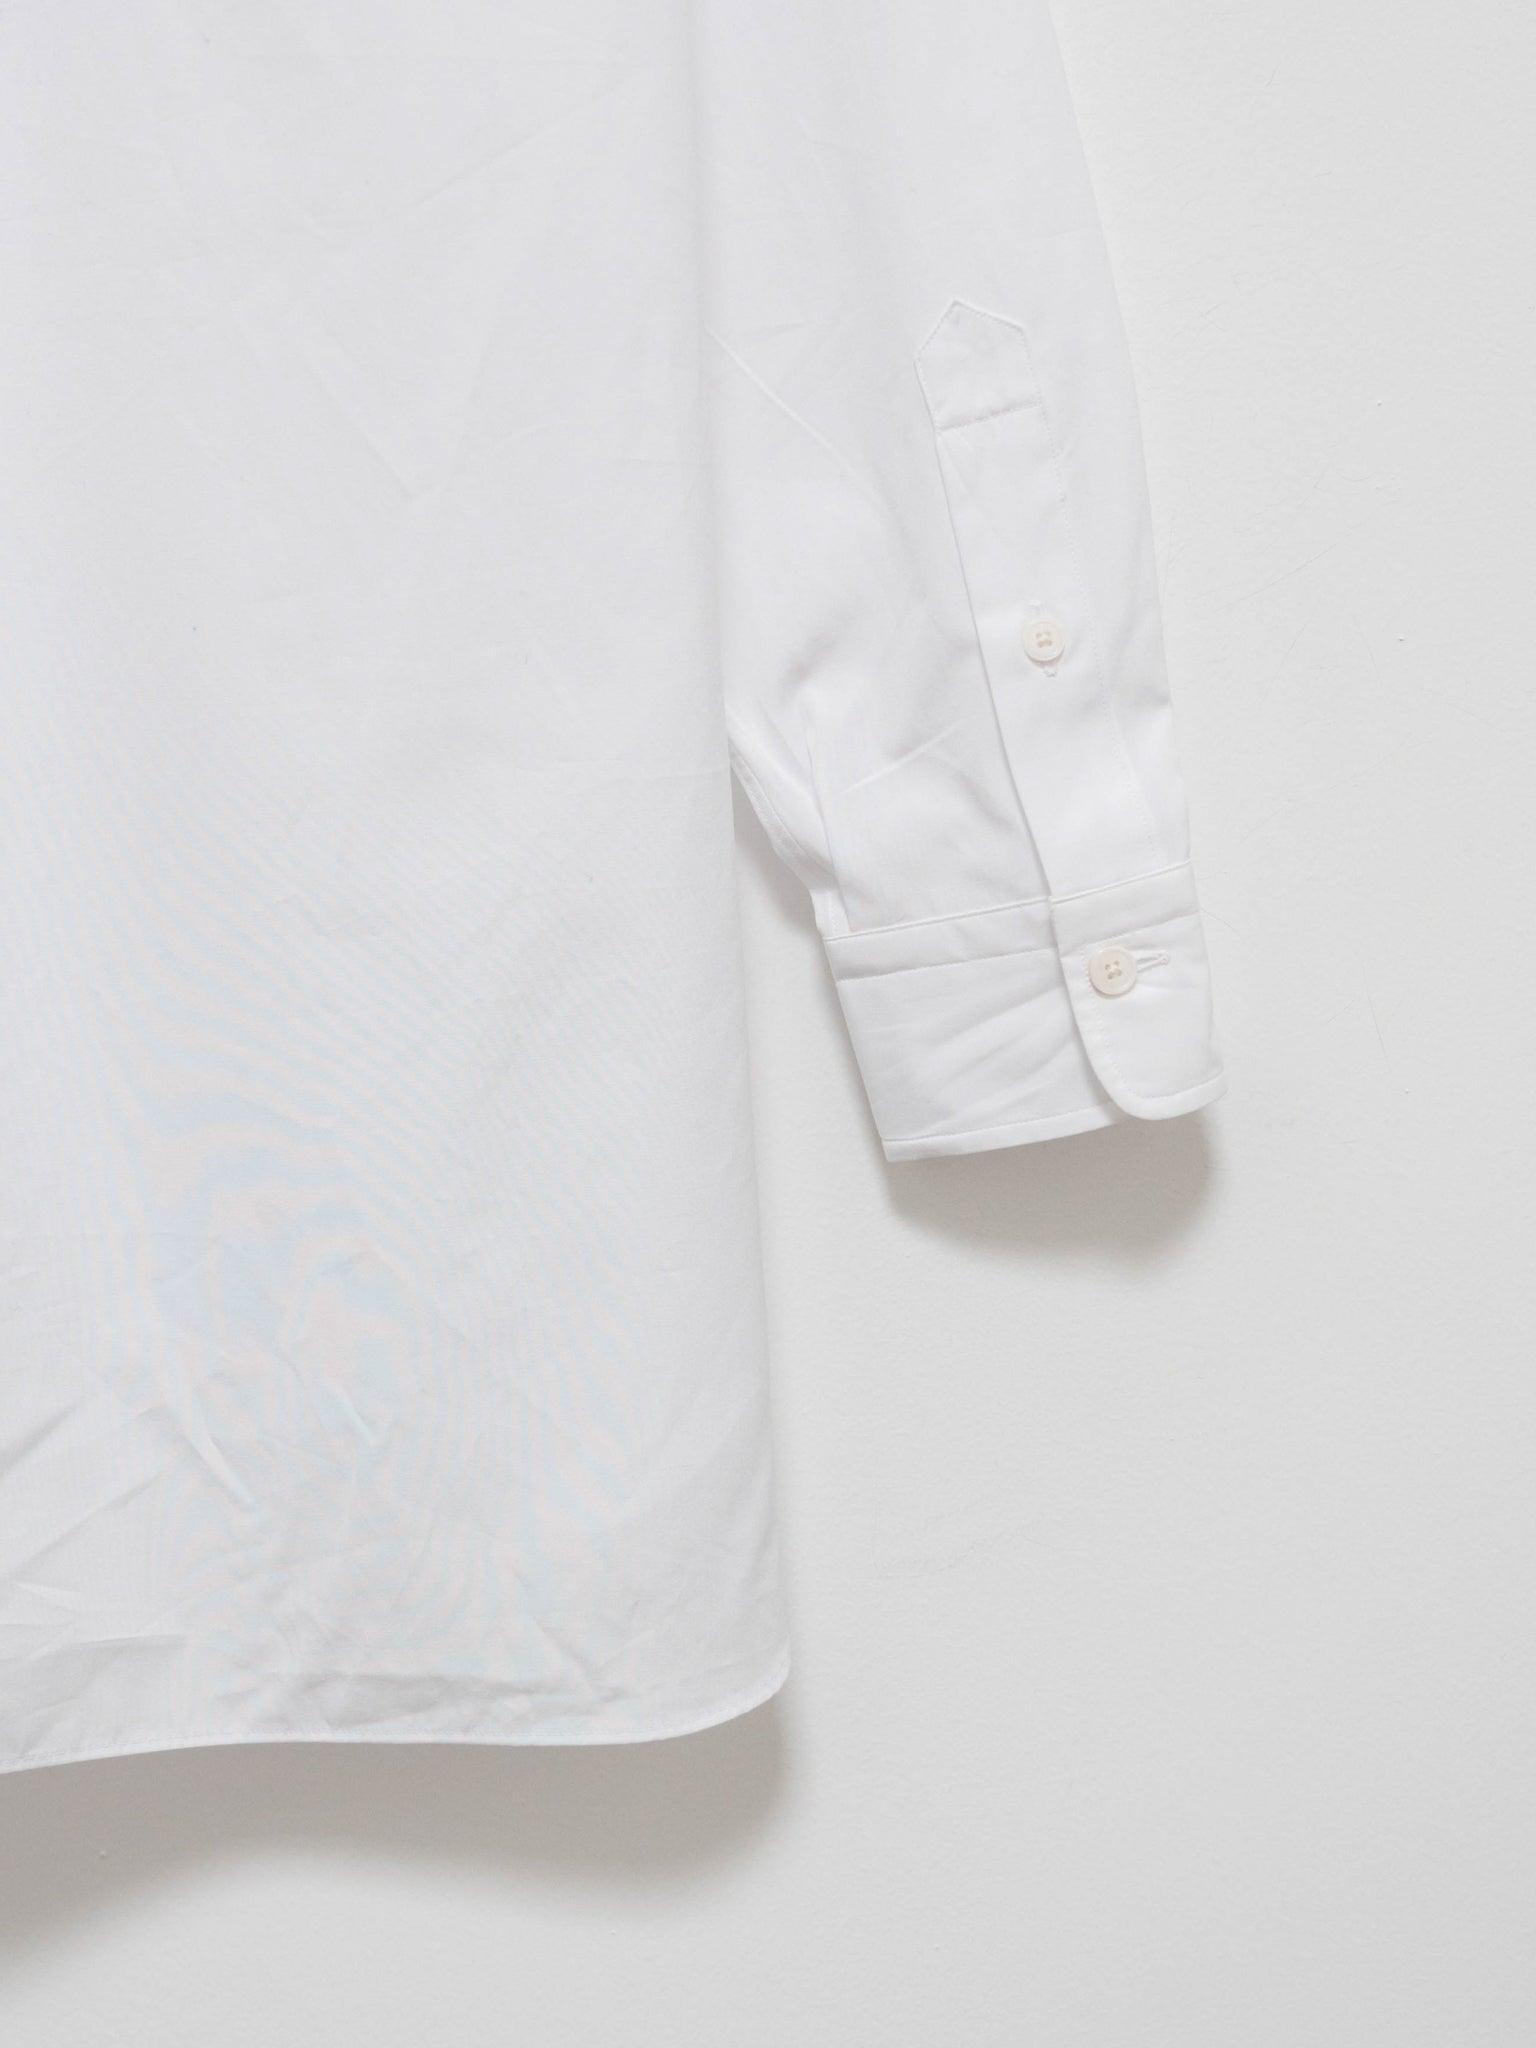 Namu Shop - Yleve Cotton Broad Shirt - White